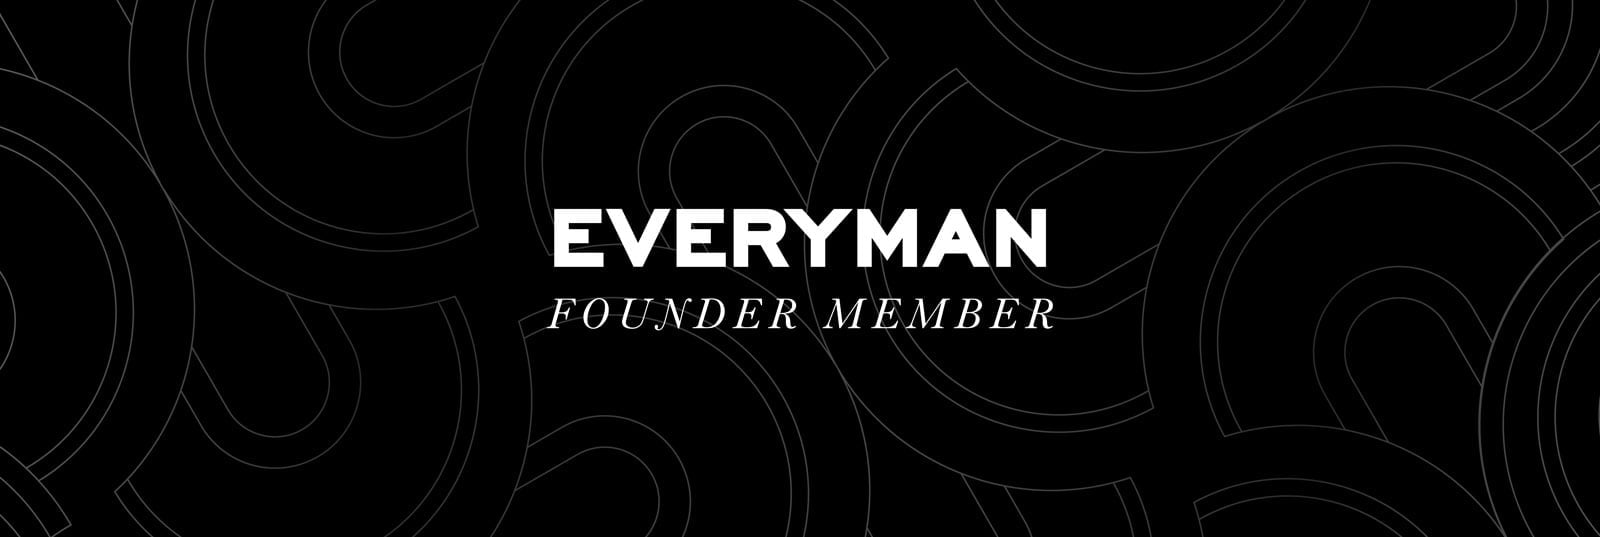 Everyman Founder member